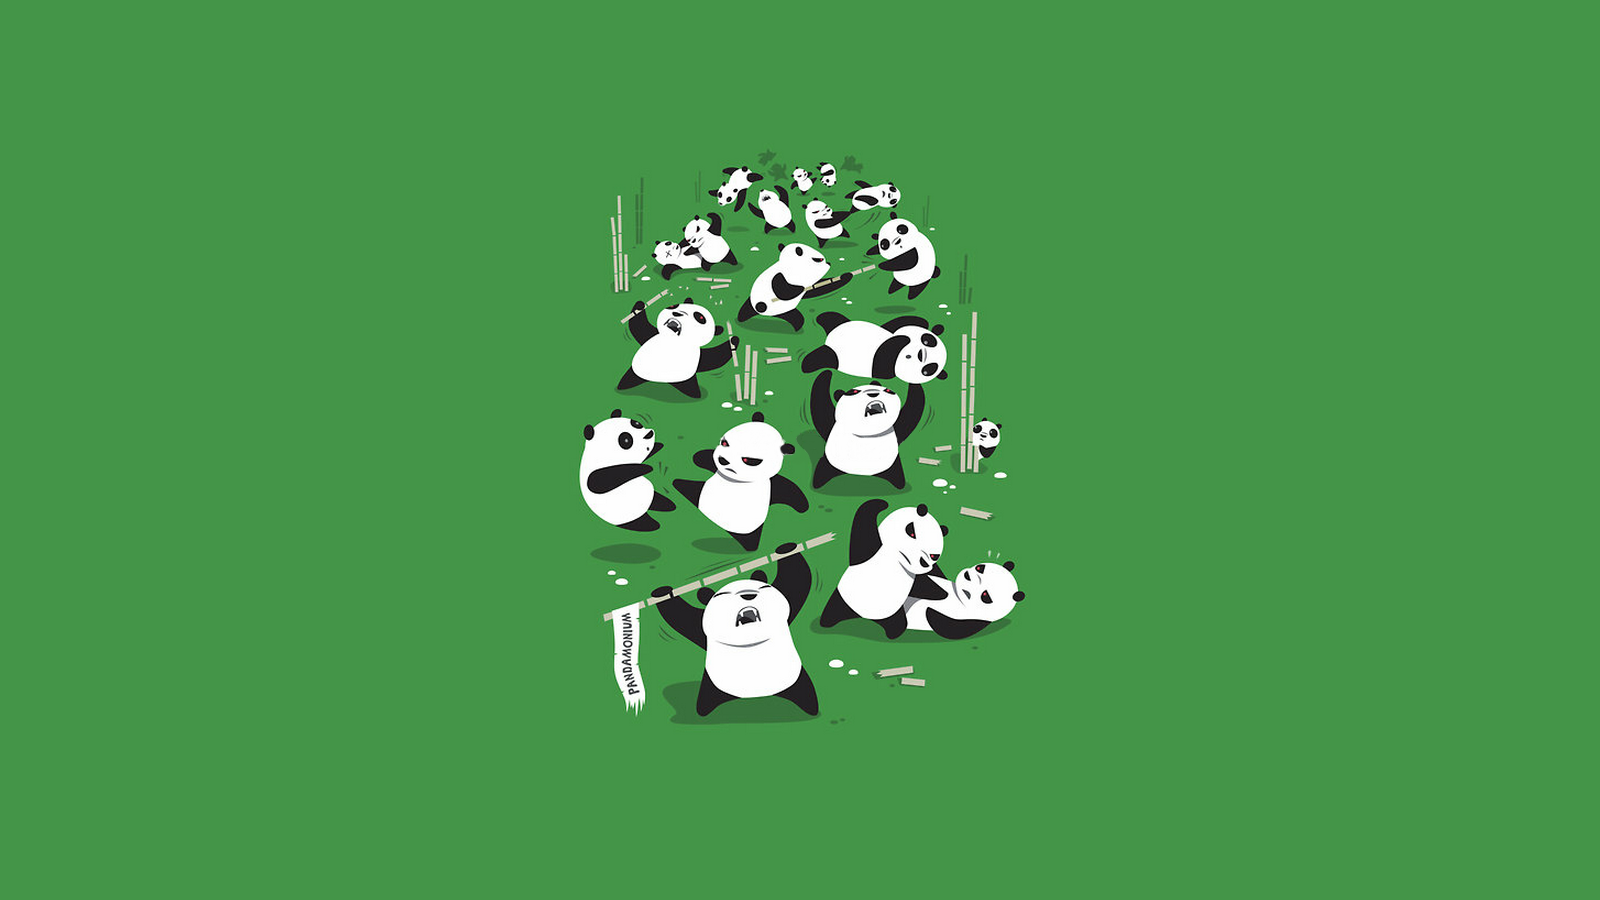 Поставь заставку ватсапа. Панда обои. Обои на рабочий стол Панда. Панда на зеленом фоне. Классные обои с пандами.